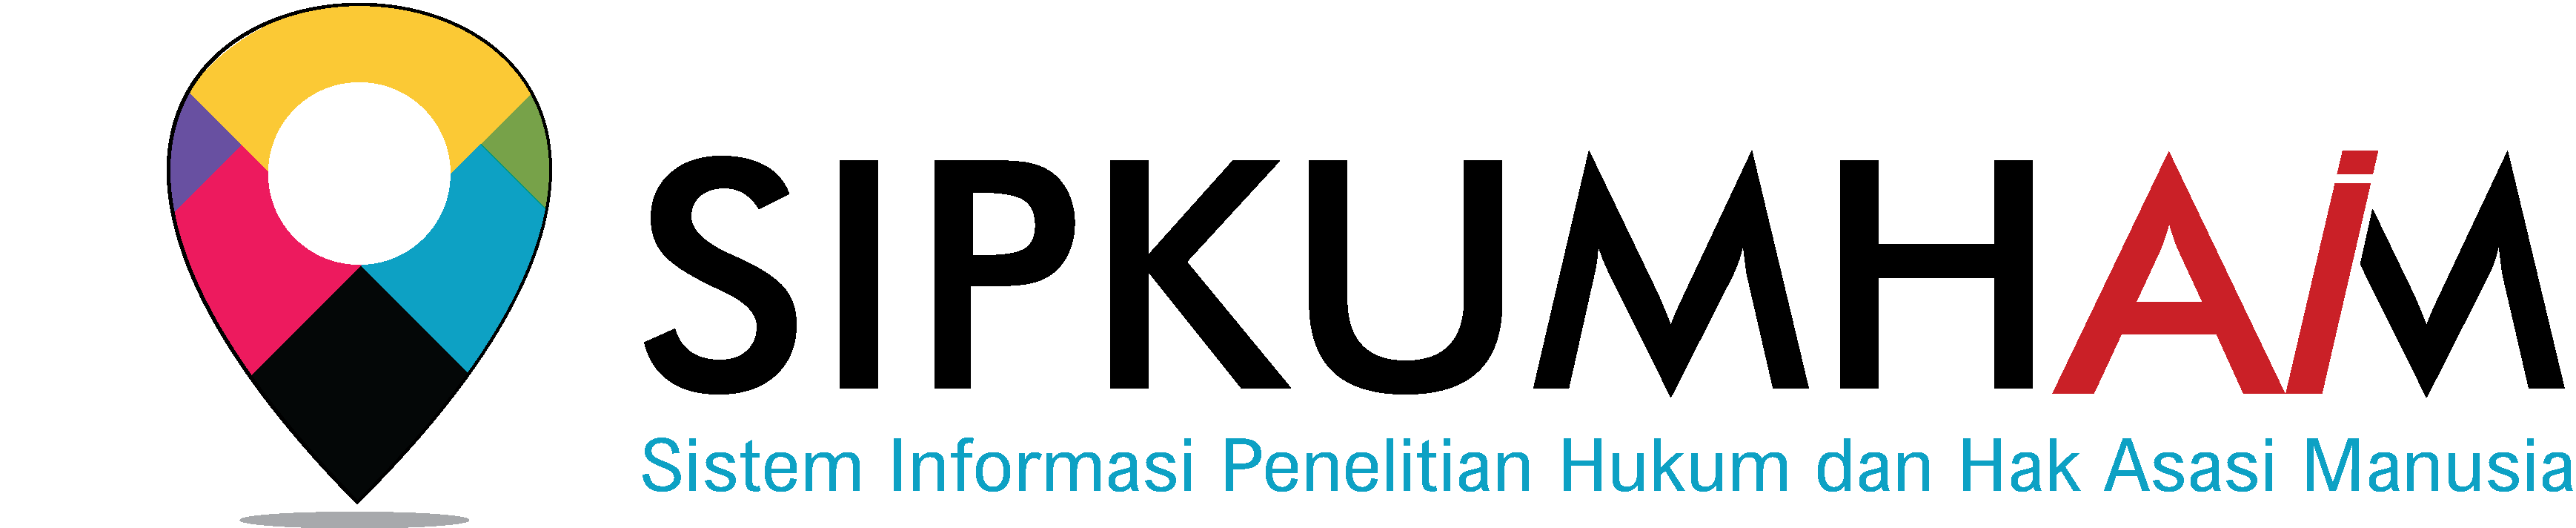 sipkumham logo